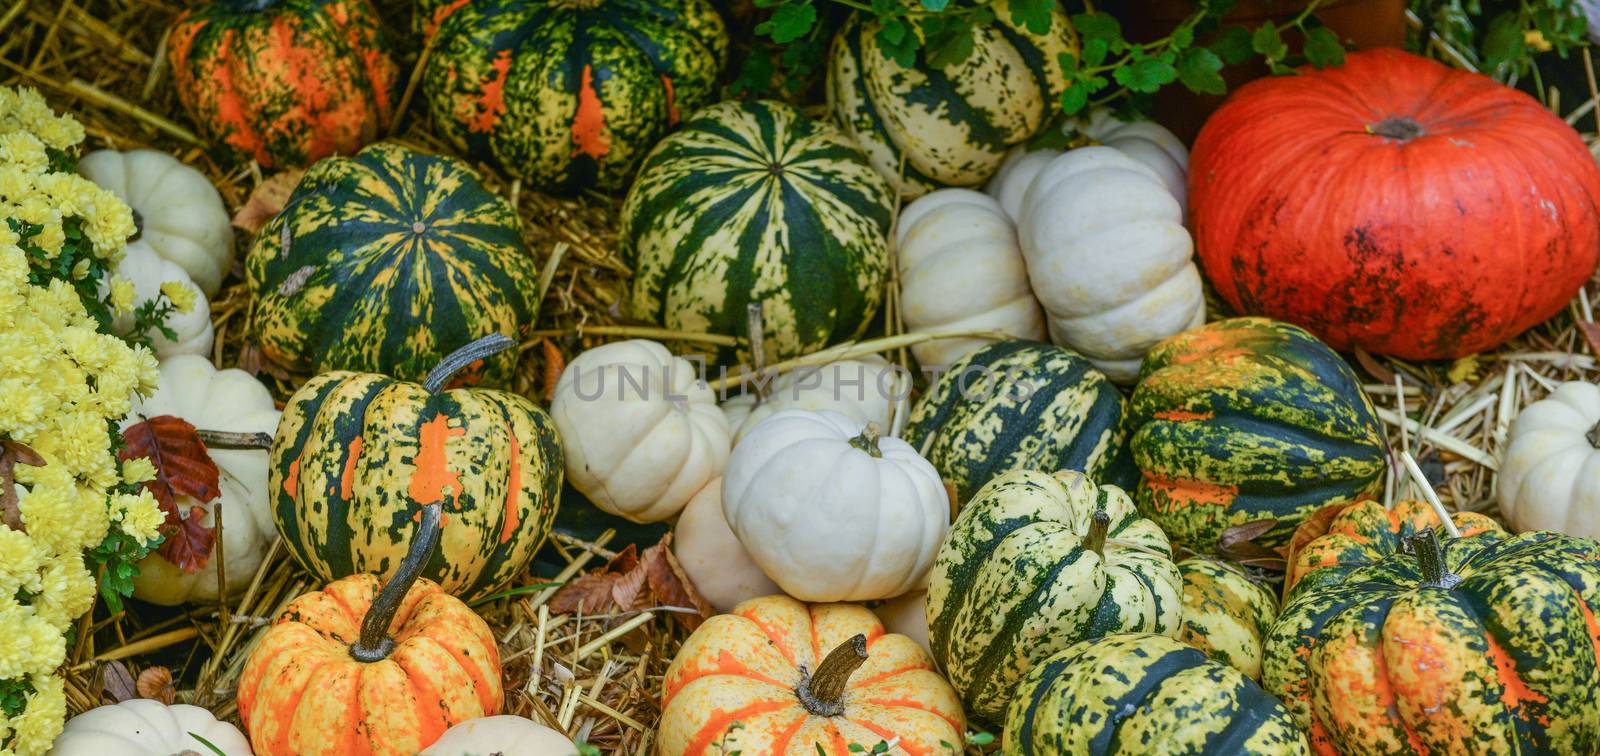 Diverse assortment of pumpkins on background. Autumn harvest. by FreeProd